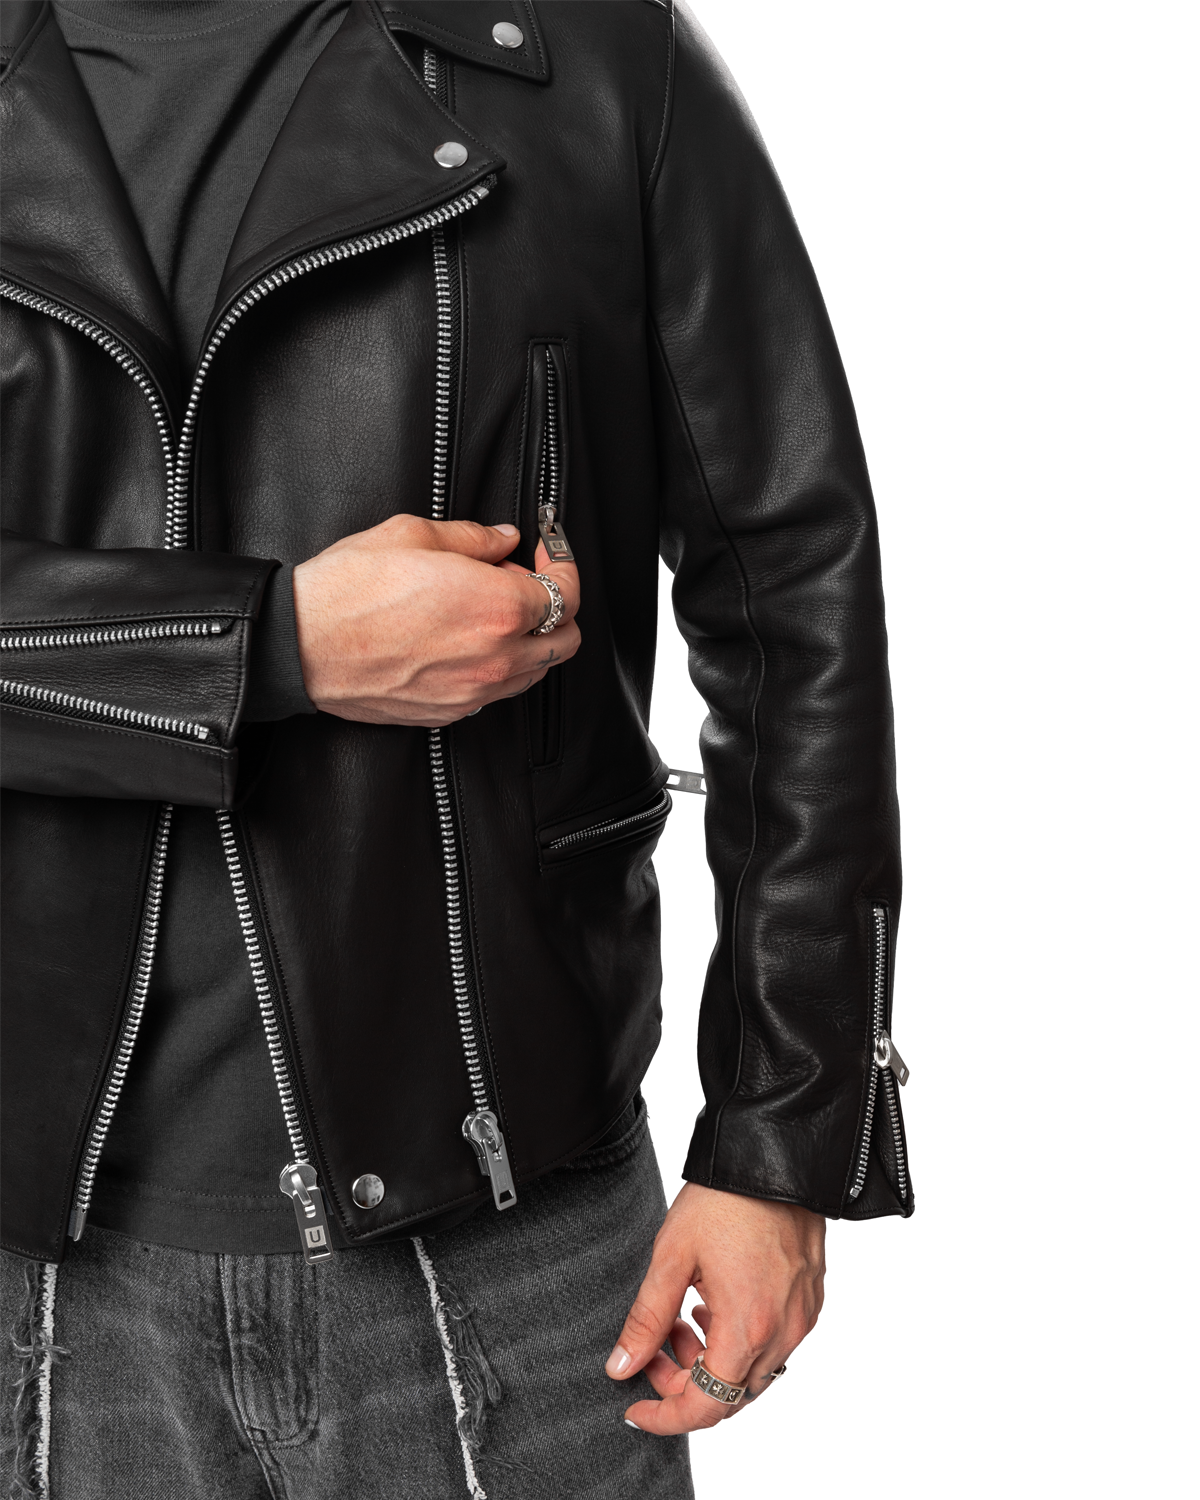 UC2C9204 Leather Biker Jacket Black